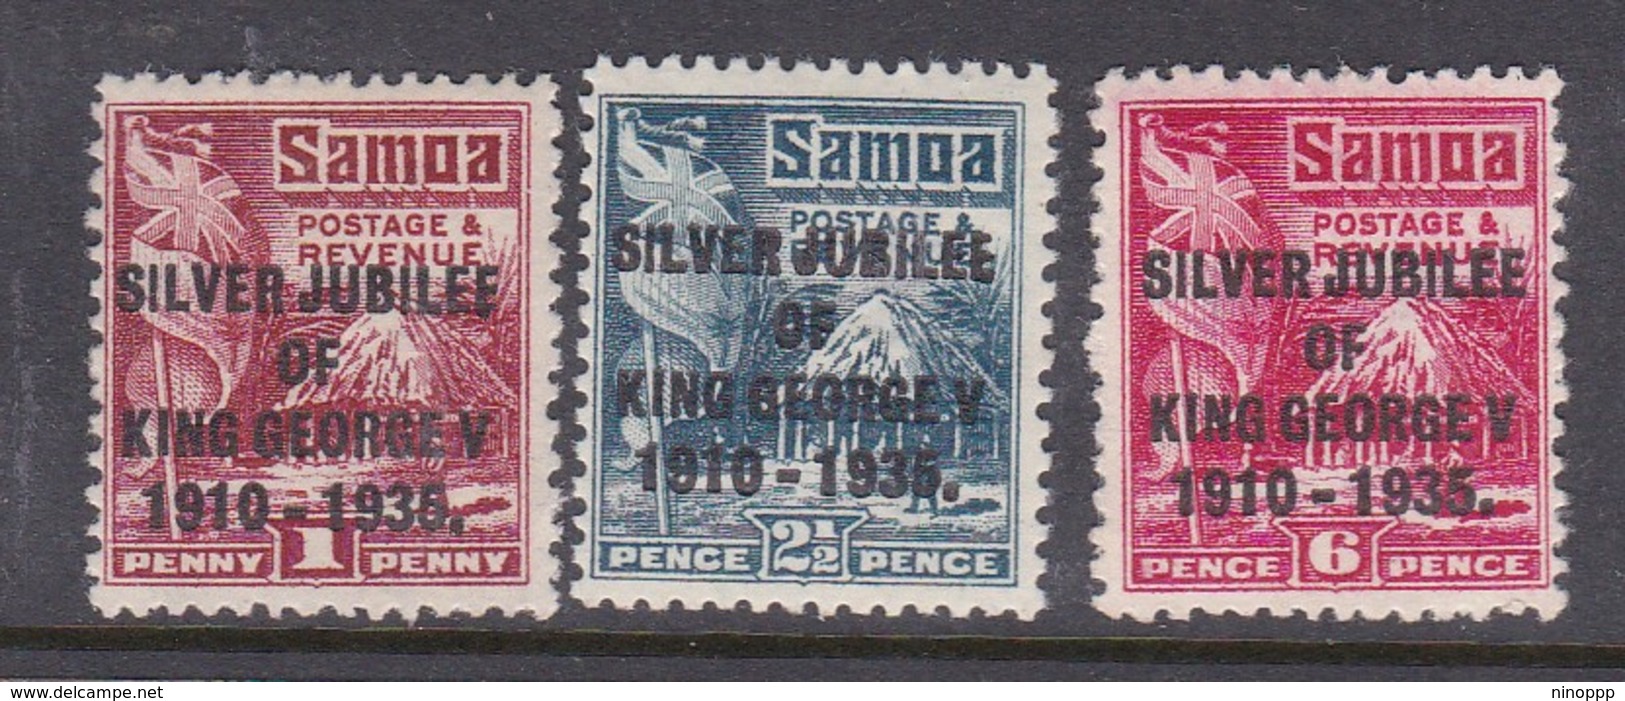 Samoa SG 177-179 1935 Silver Jubilee Mint Hinged - Samoa